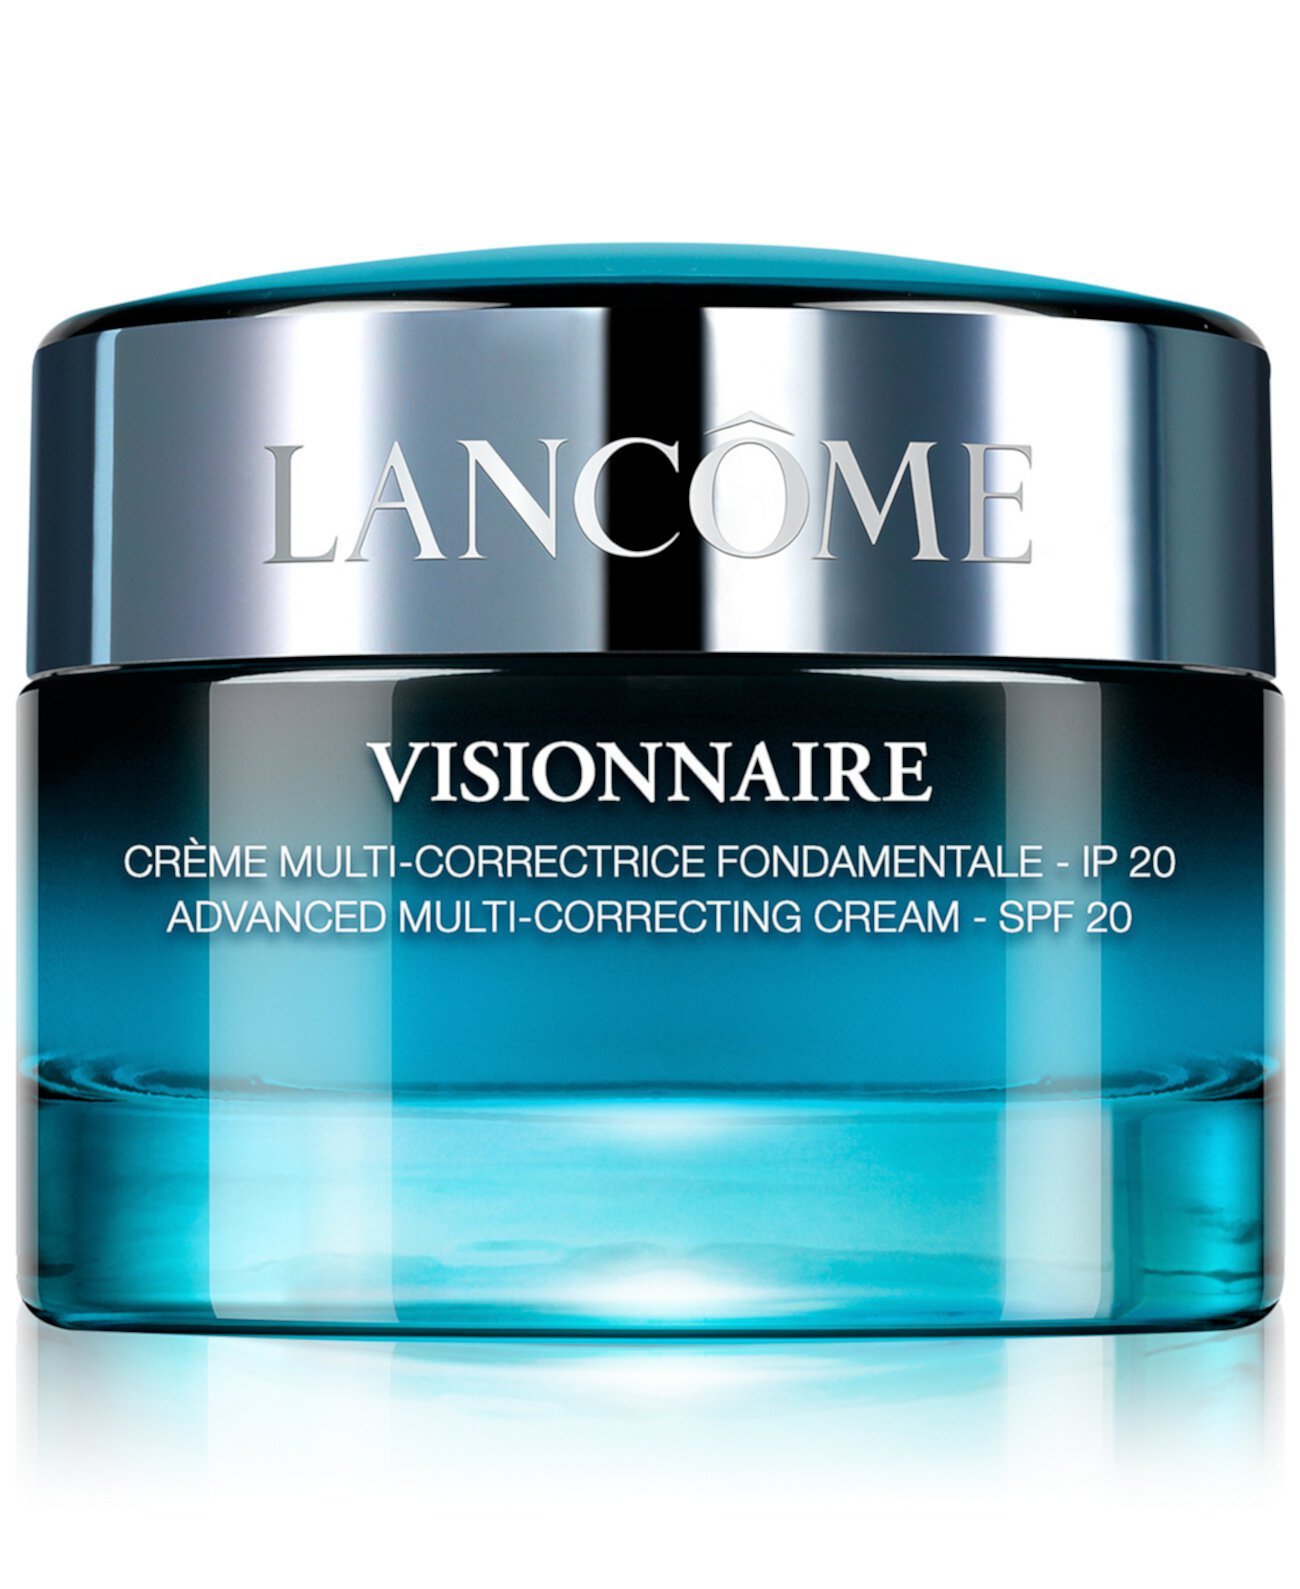 Visionnaire Advanced Multi-Correcting Cream - SPF 20, 1,7 унции. Lancome